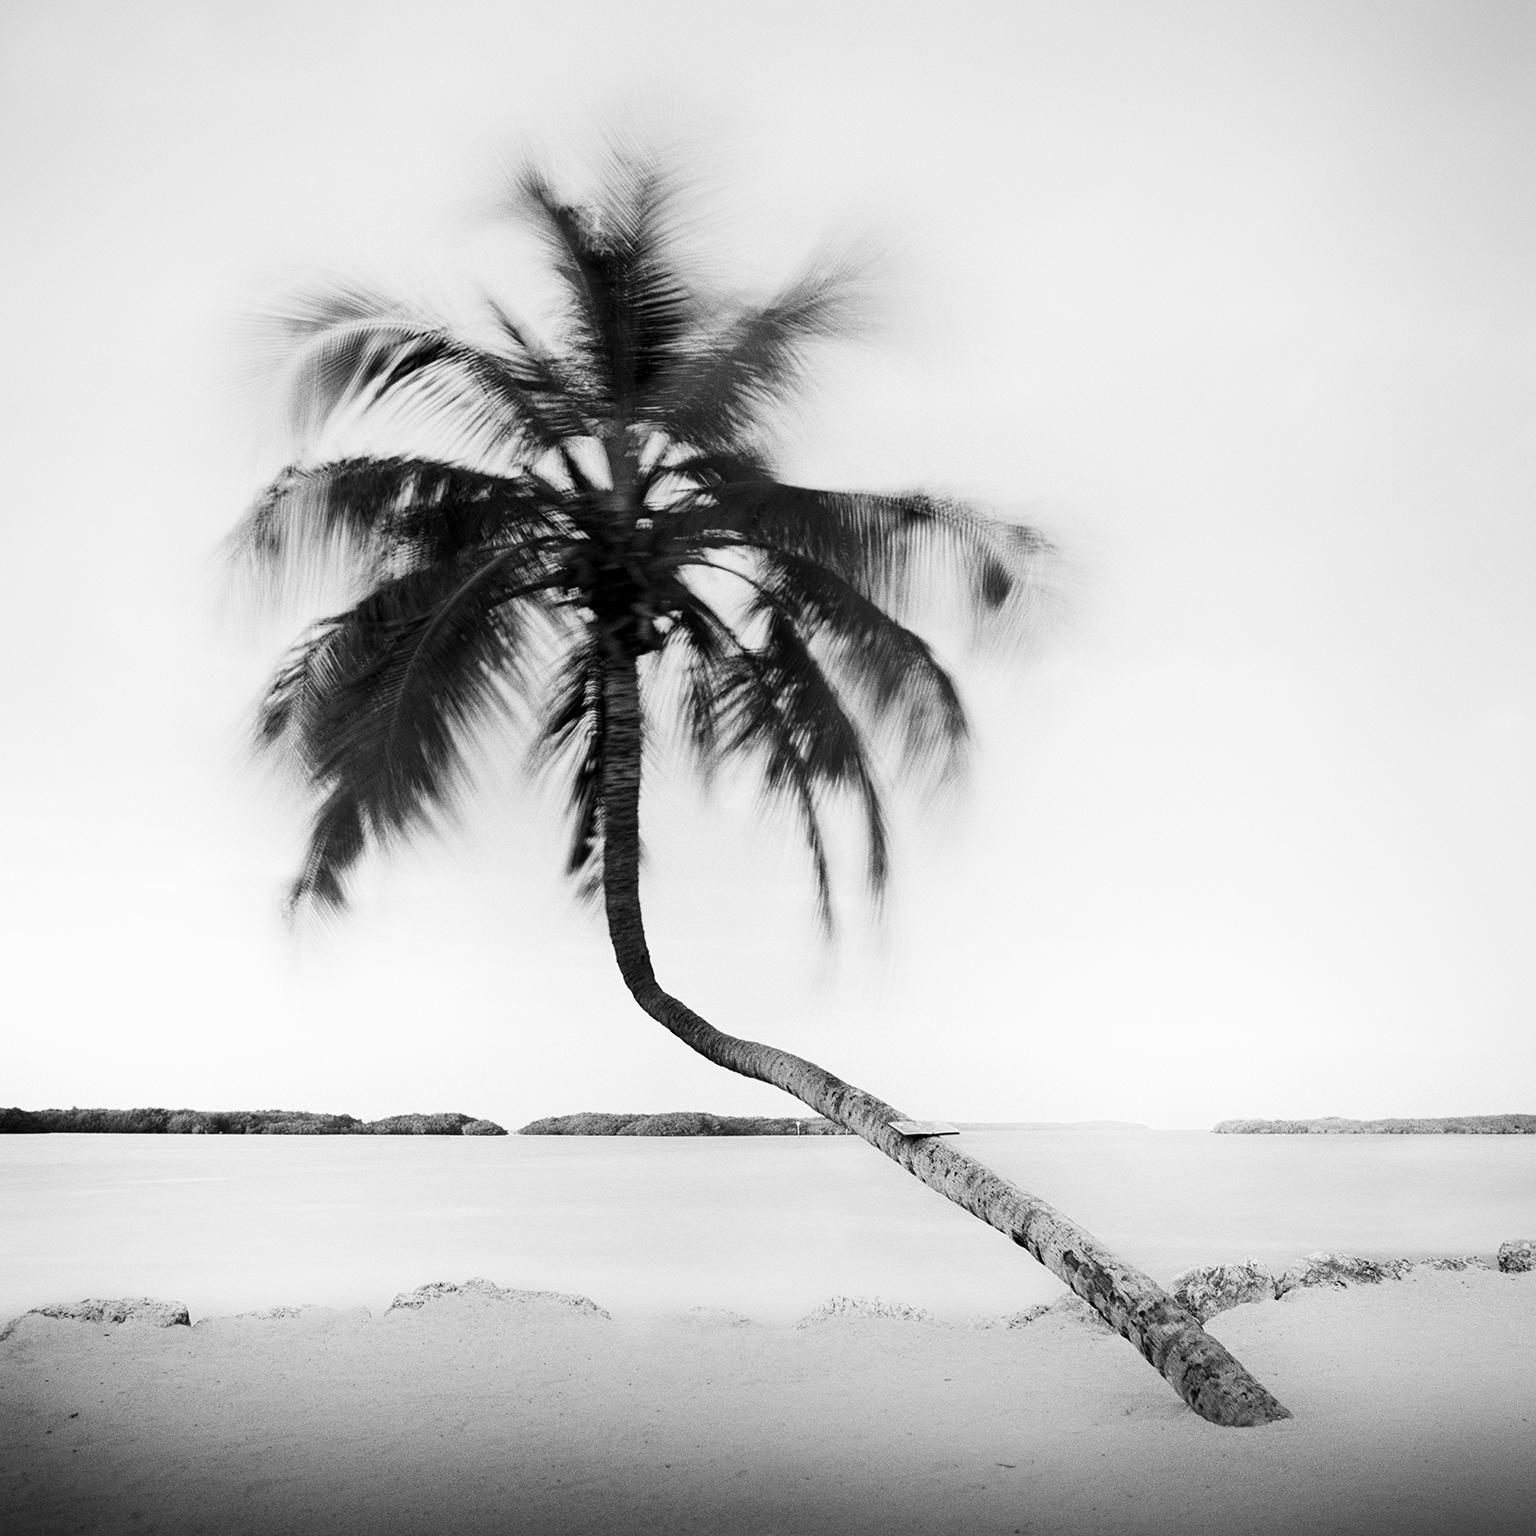 Bent Palm, Beach, Florida, USA, black and white fine art photography, landscape